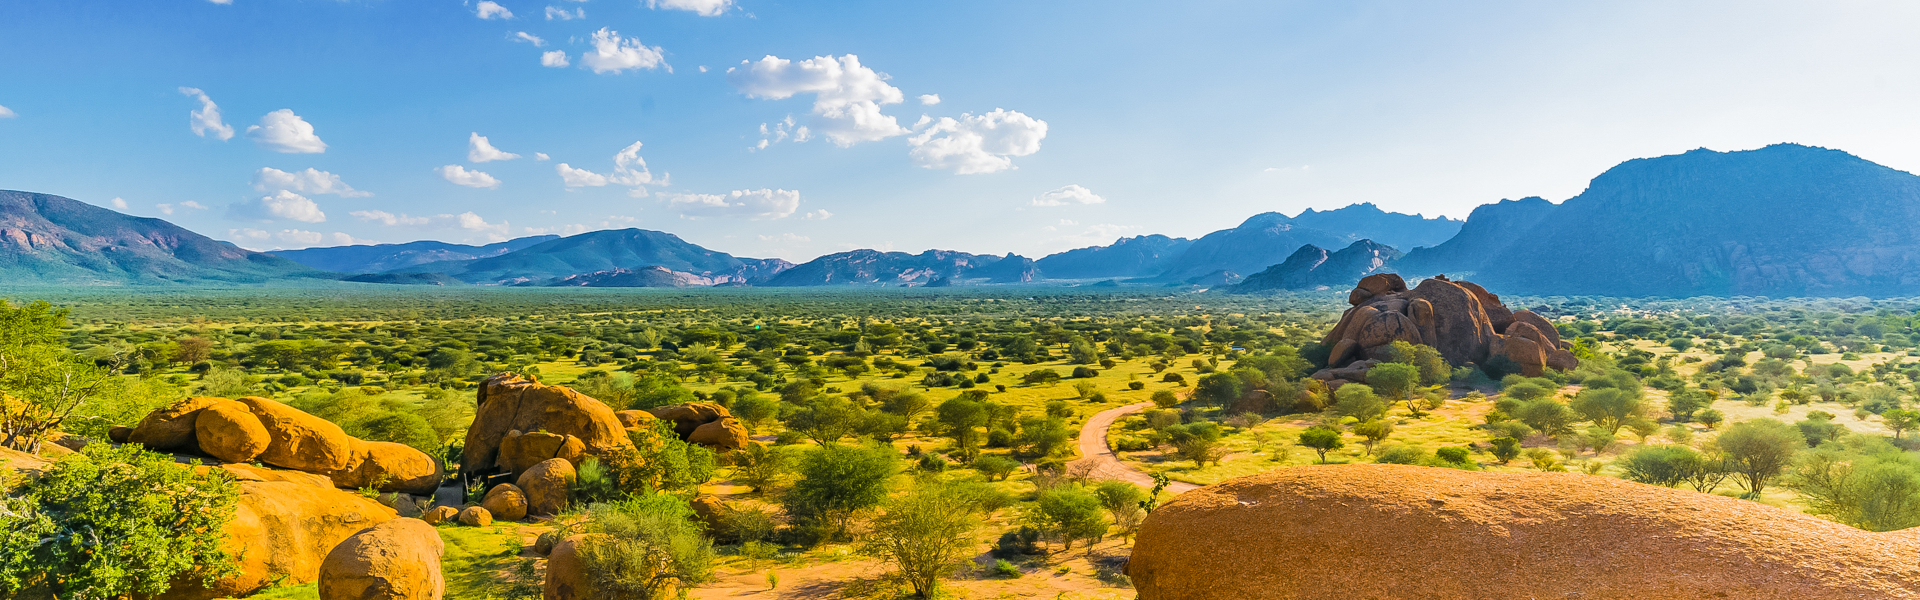 Namibia Natur & Tiere intensiv